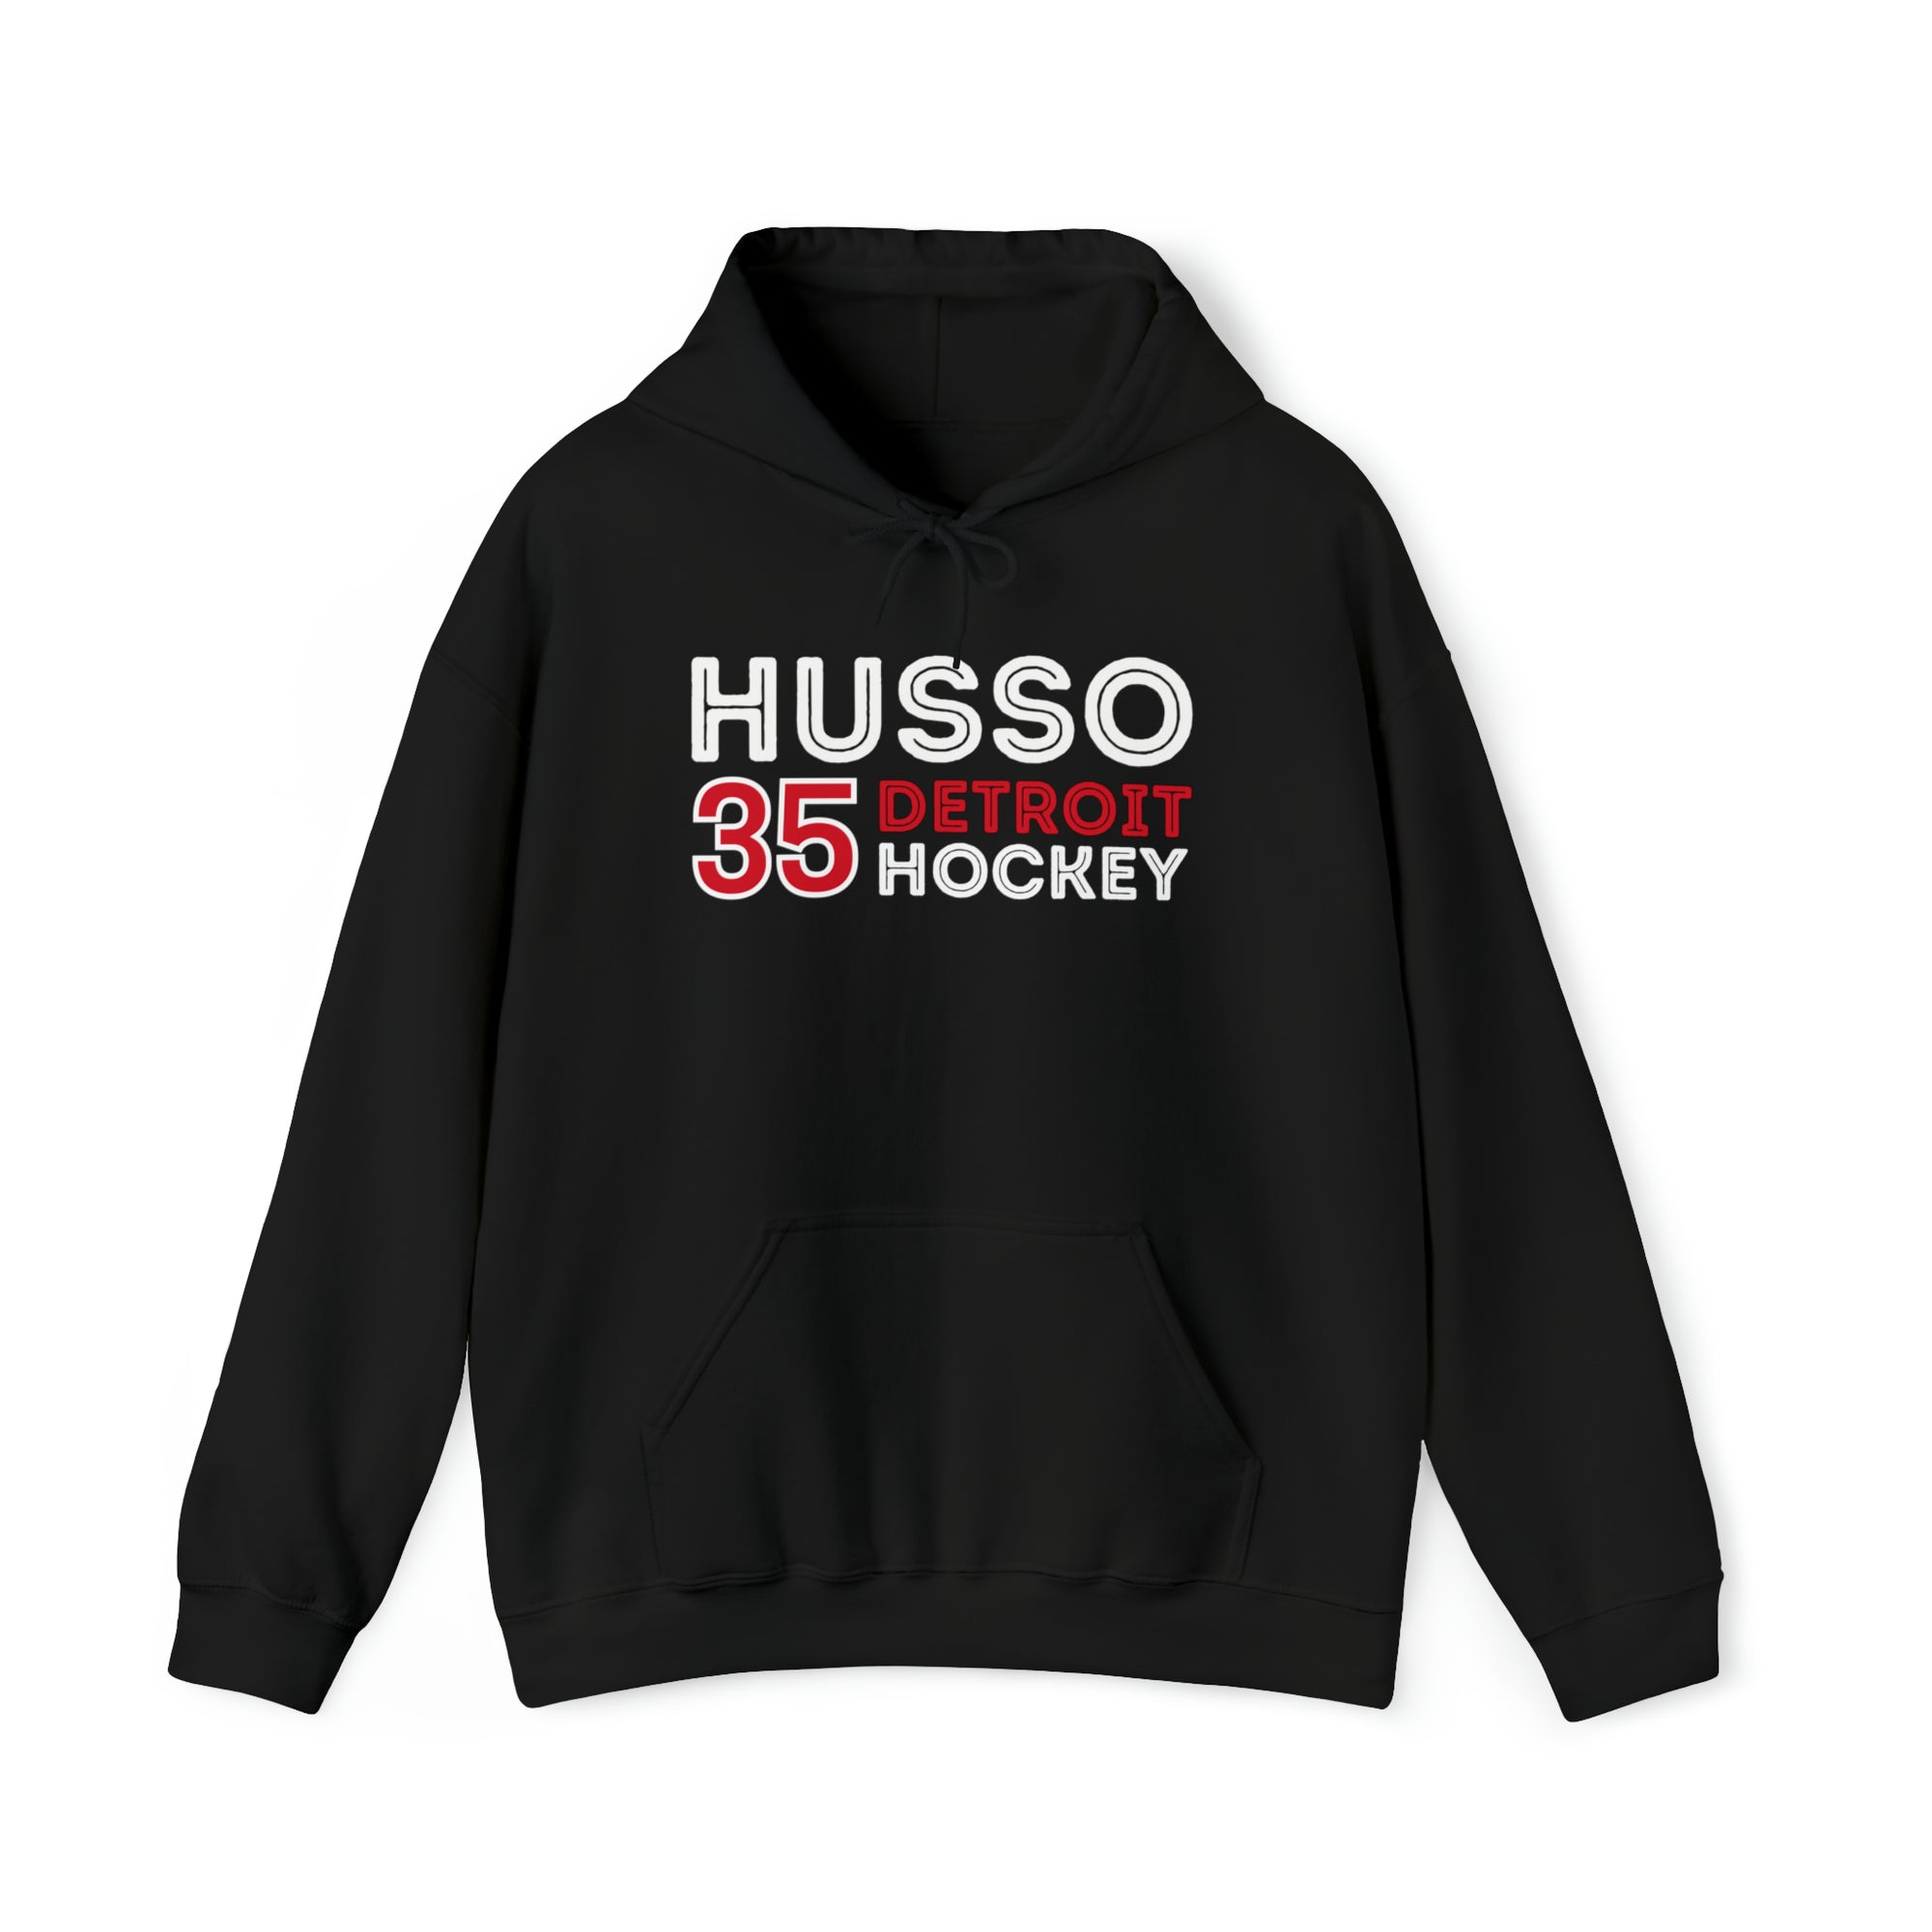 Husso 35 Detroit Hockey Grafitti Wall Design Unisex Hooded Sweatshirt